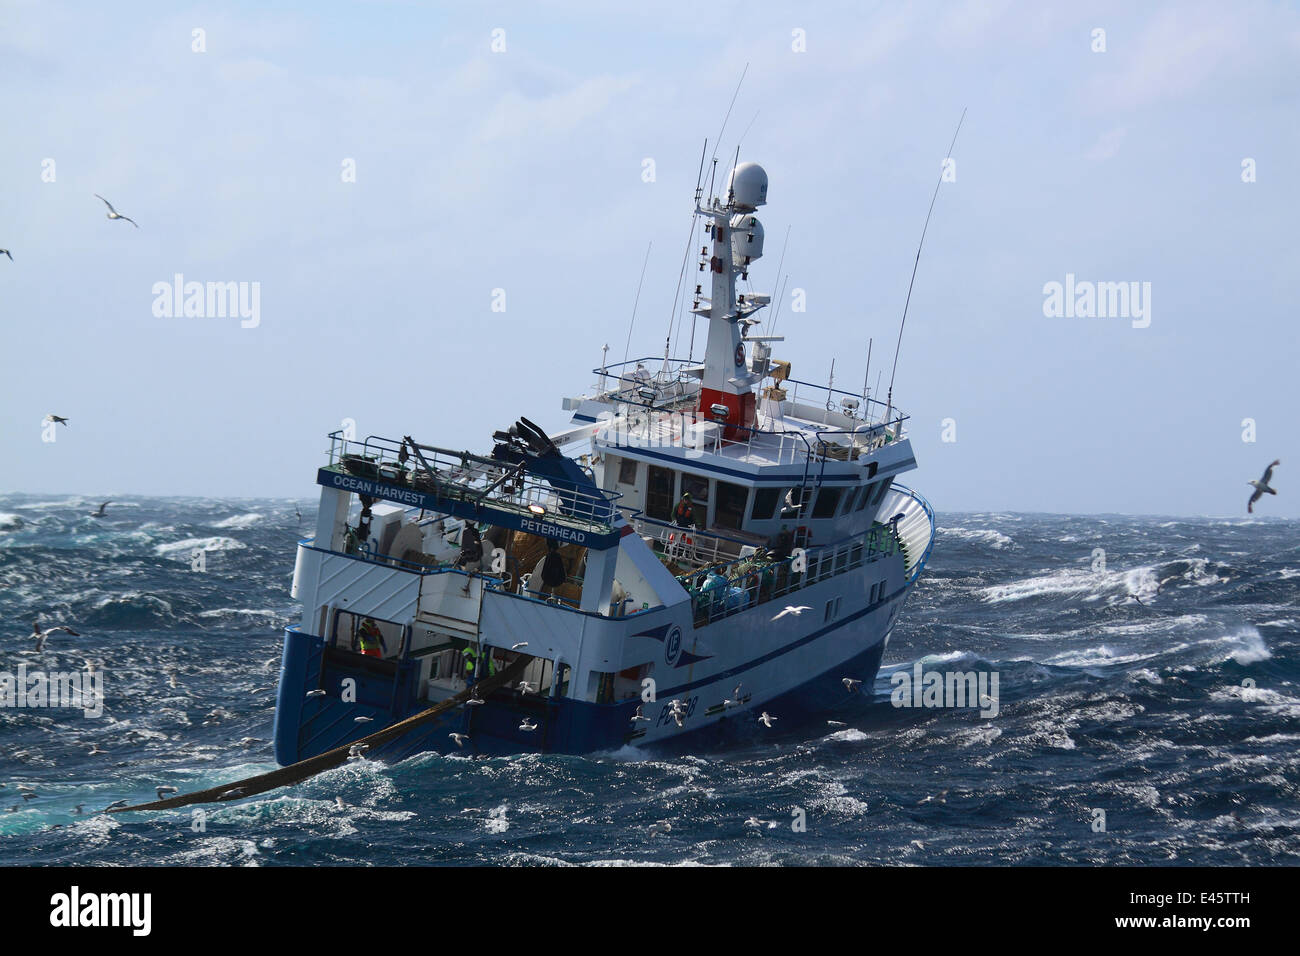 Fishing vessel 'Ocean Harvest' hauling net onboard. North Sea, September 2010. Property released. Stock Photo